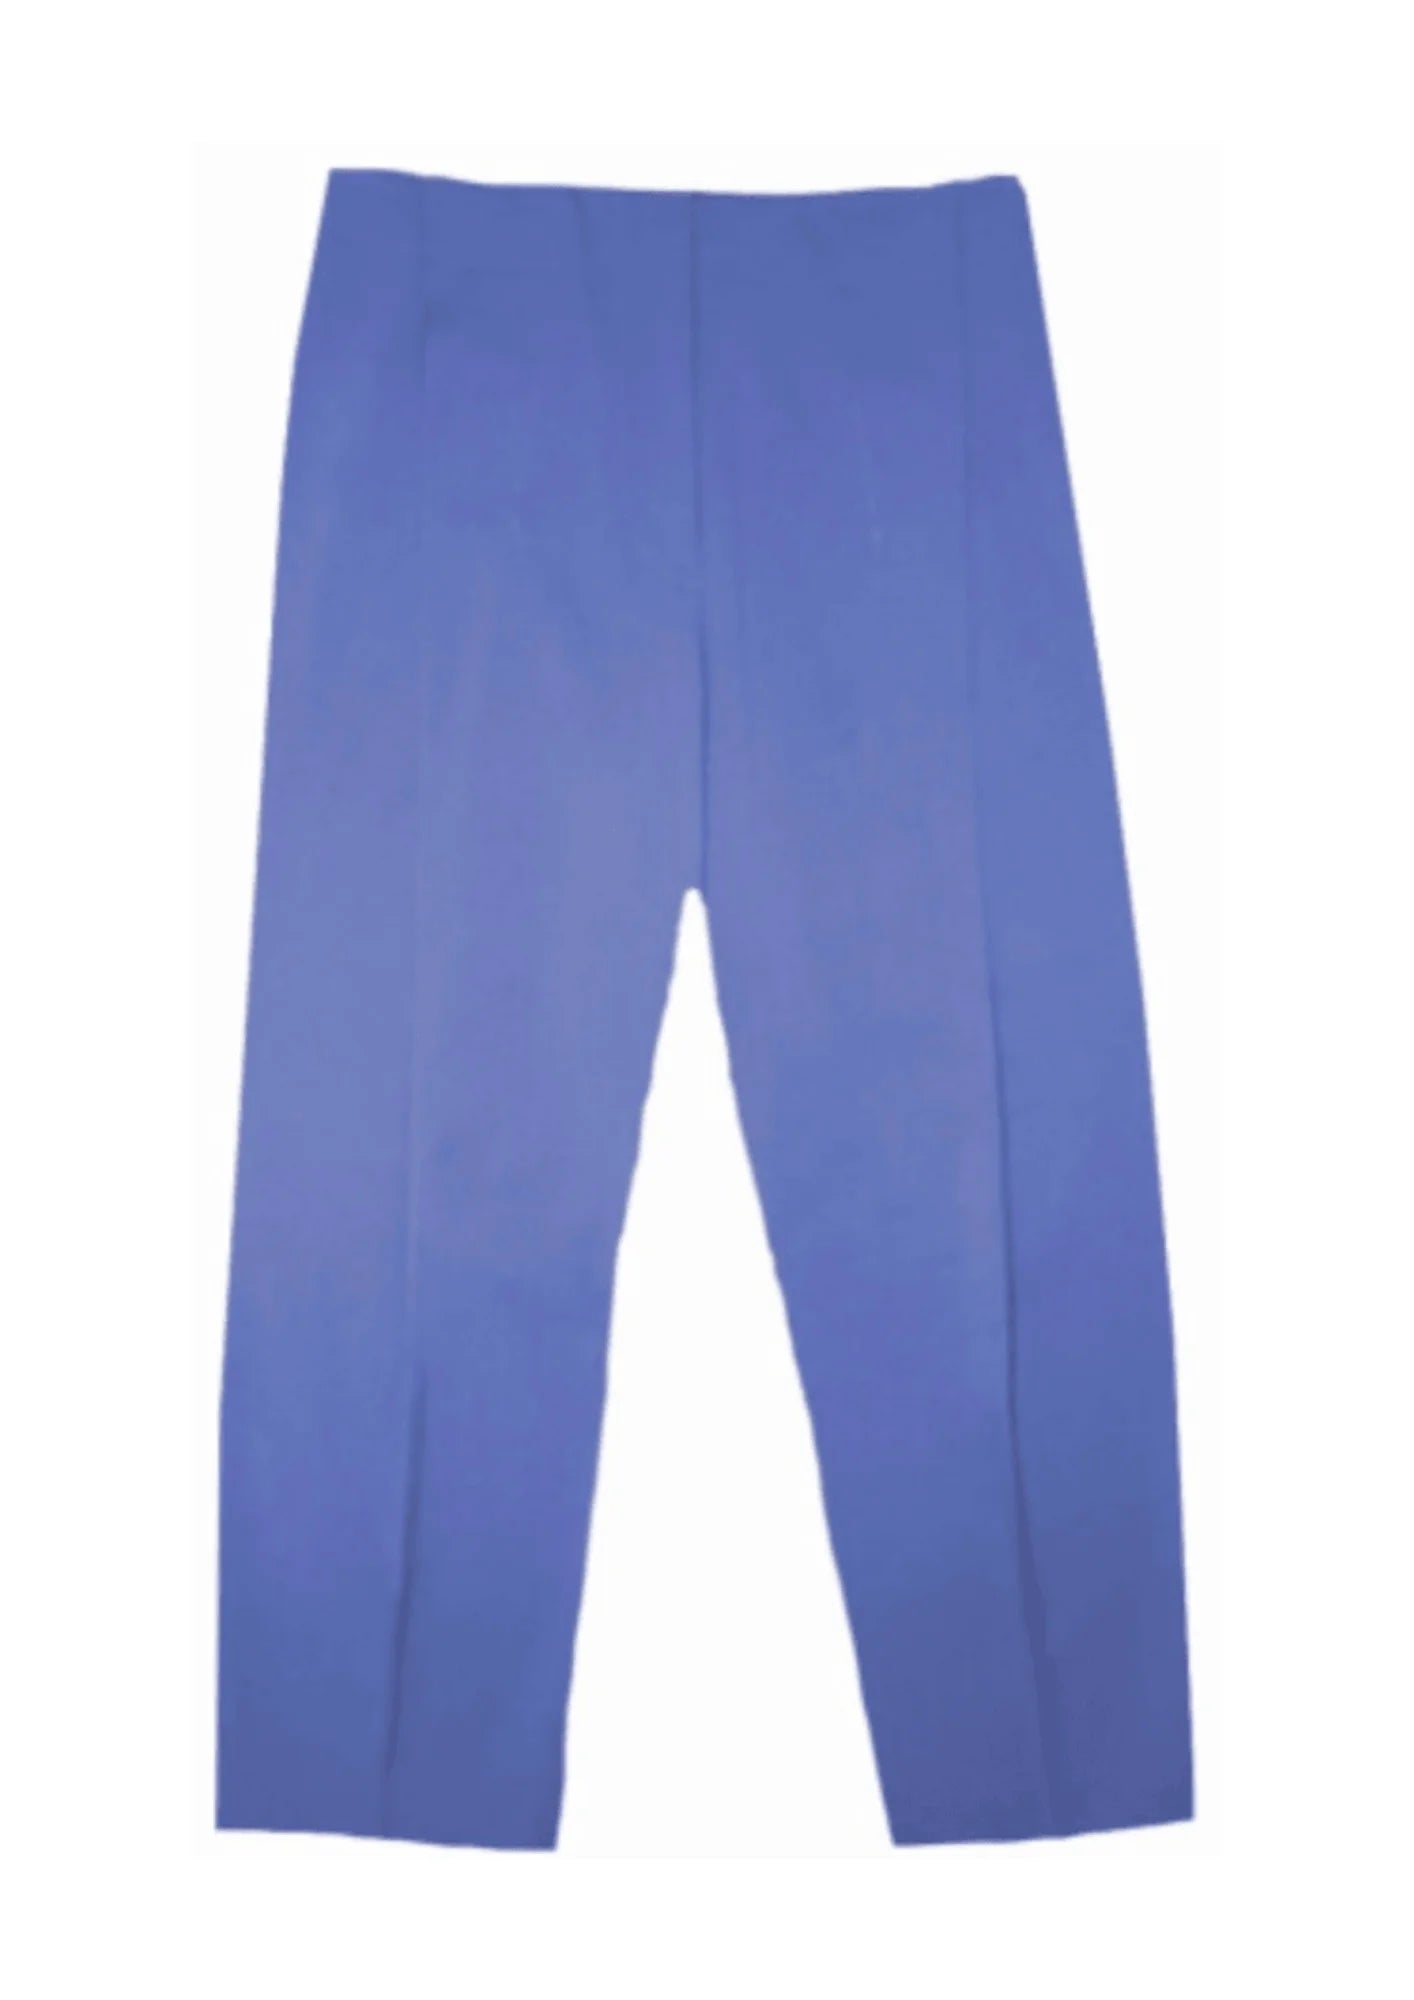 ARIBEA BLUE PANTS